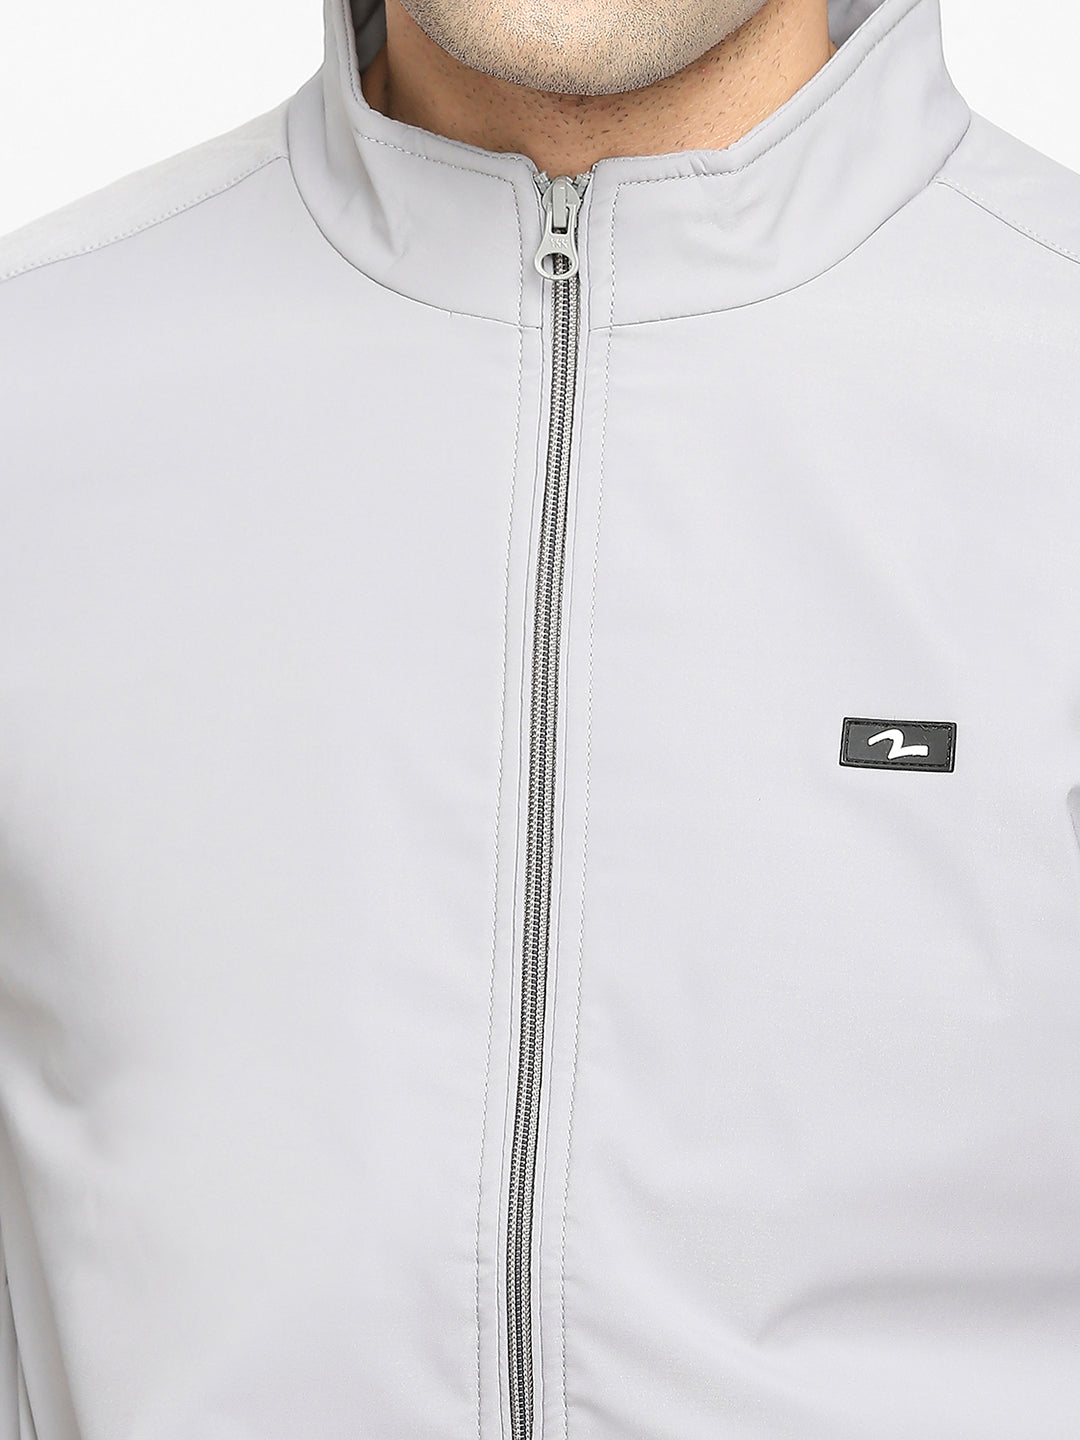 Spykar Light Grey Polyester Full Sleeve Casual Jacket For Men